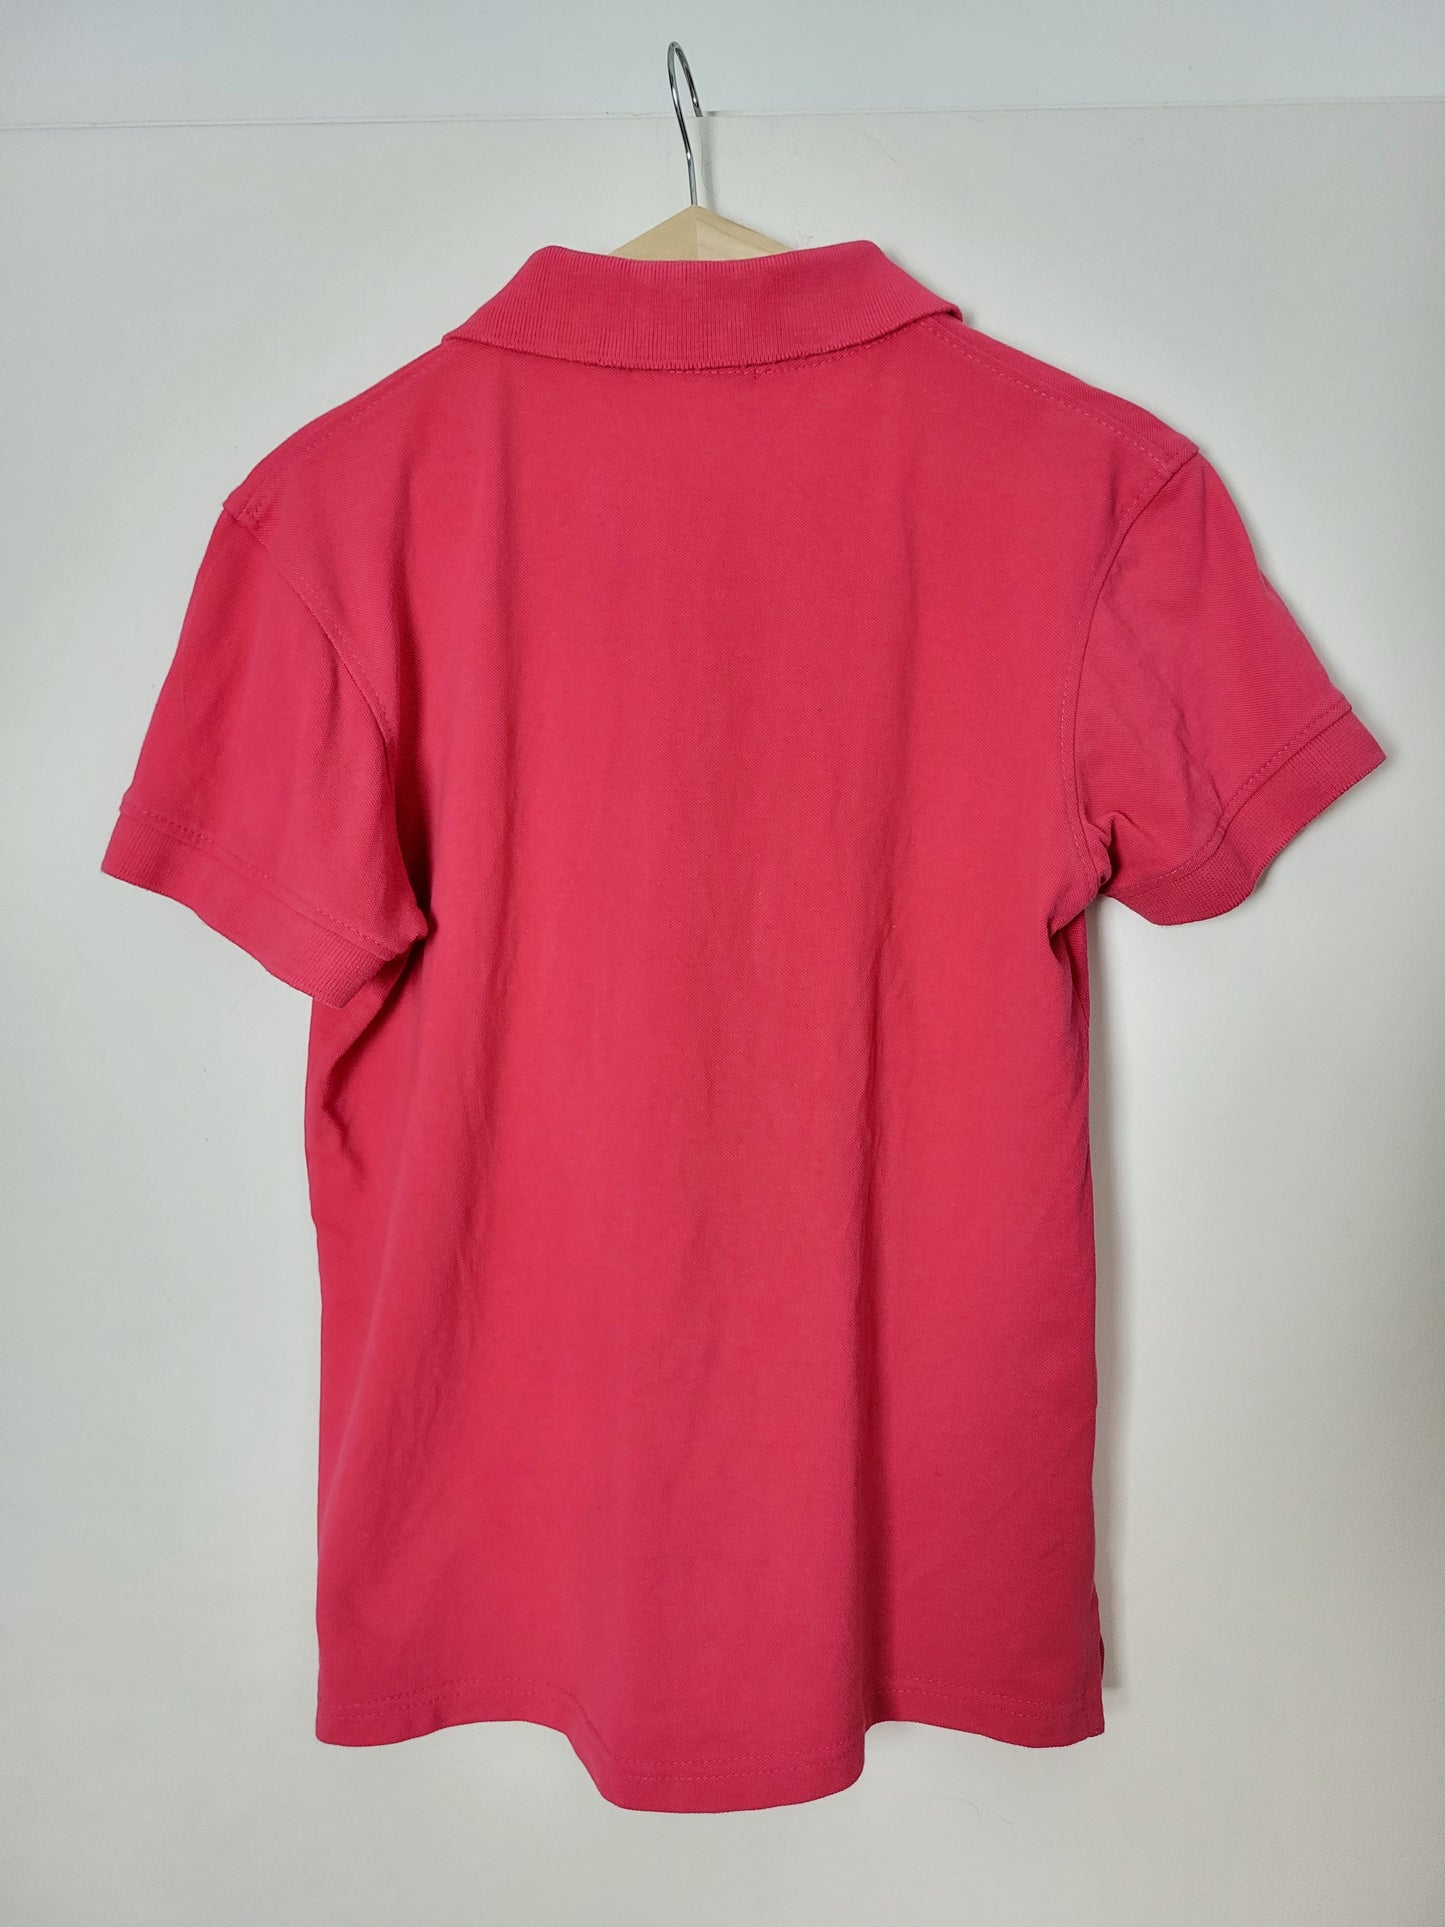 VINTAGE BURBERRY - Poloshirt - Klassisch - Pink - Damen - S